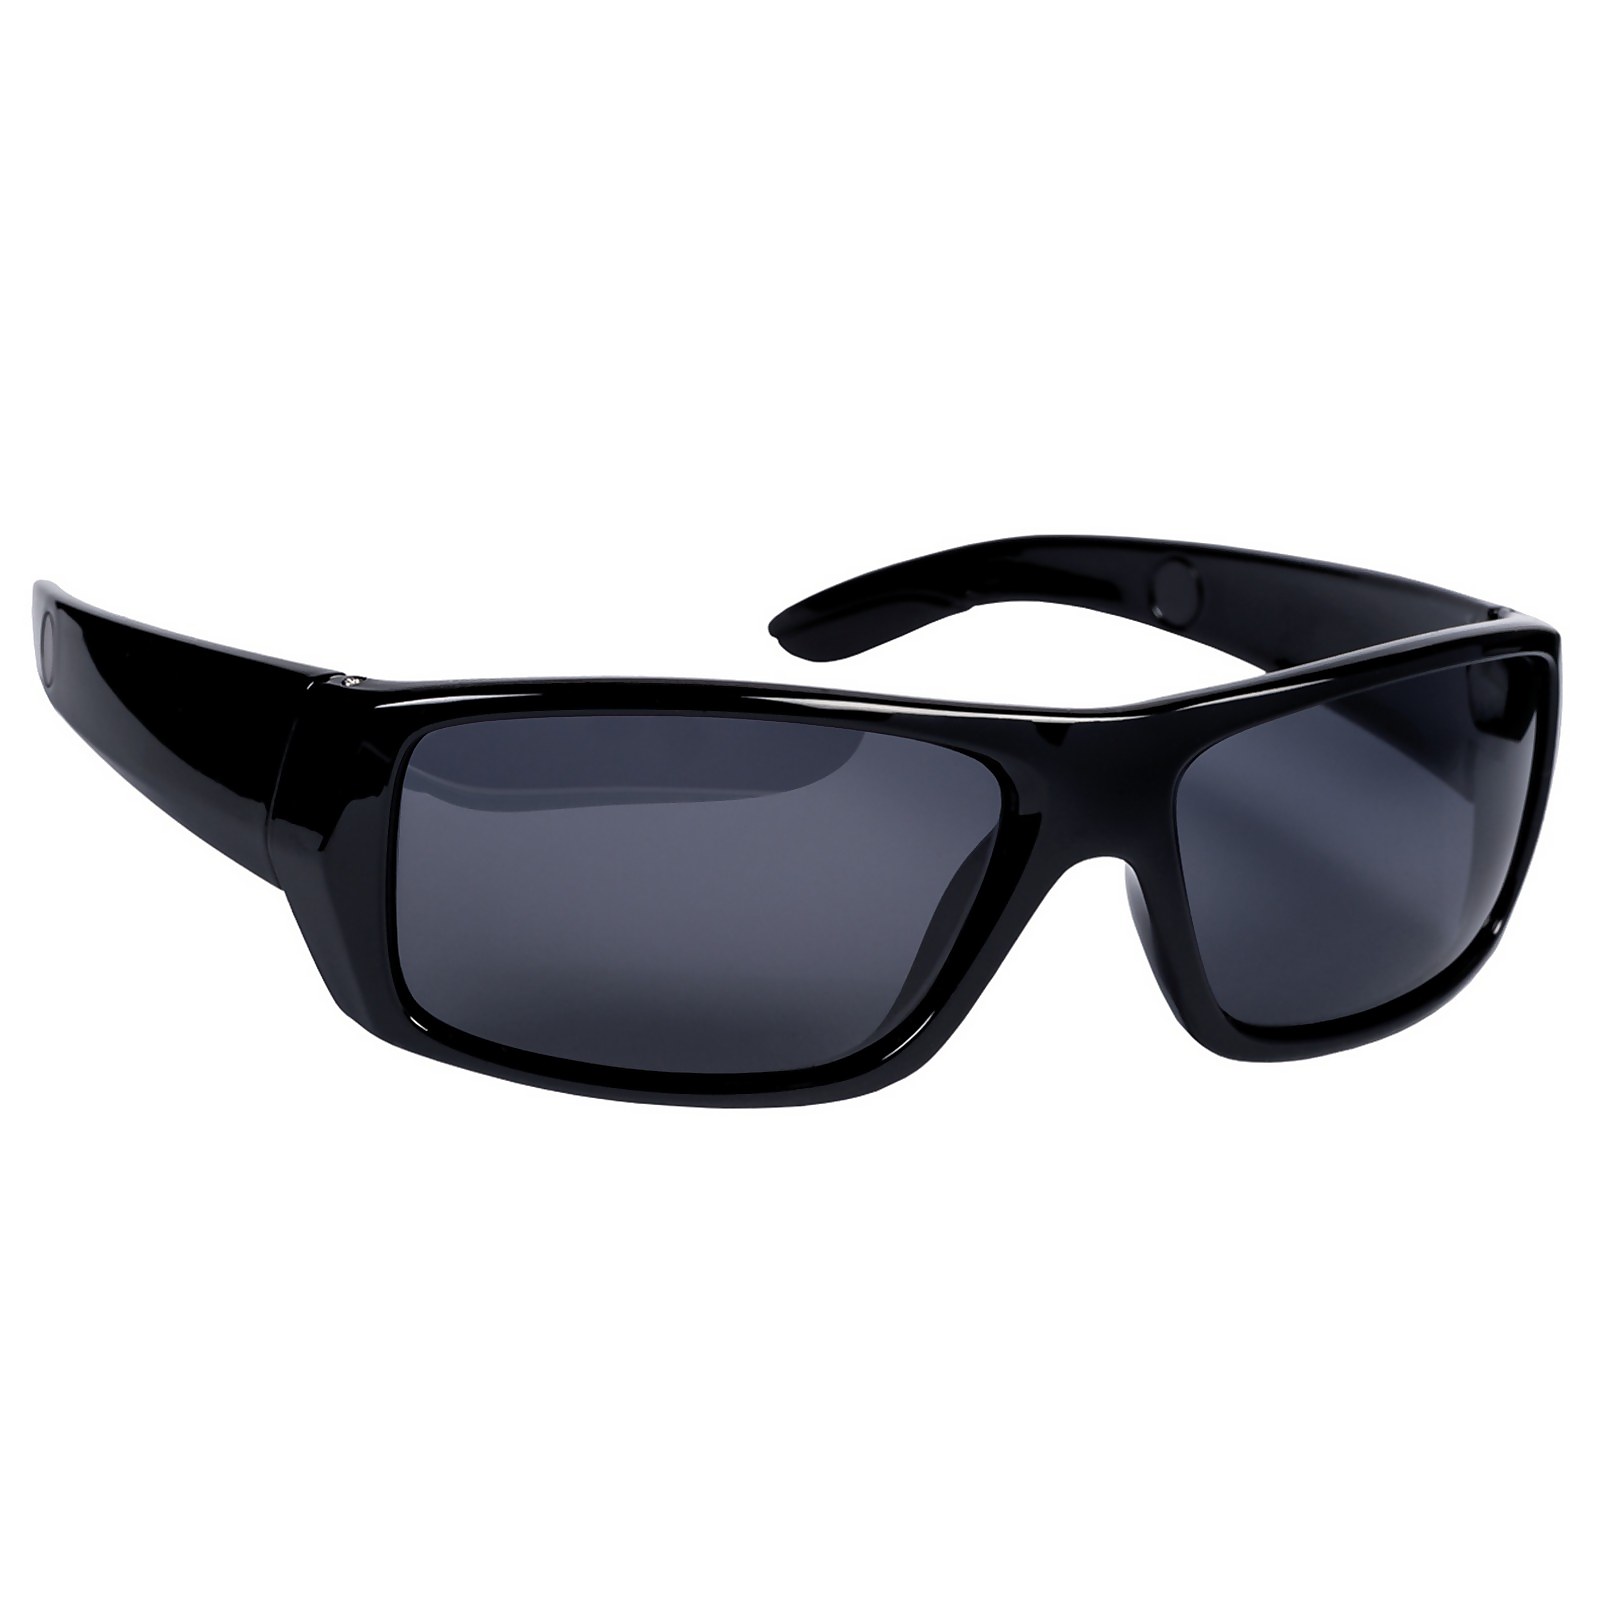 Photo of Pola Optics Hd Sunglasses - Black